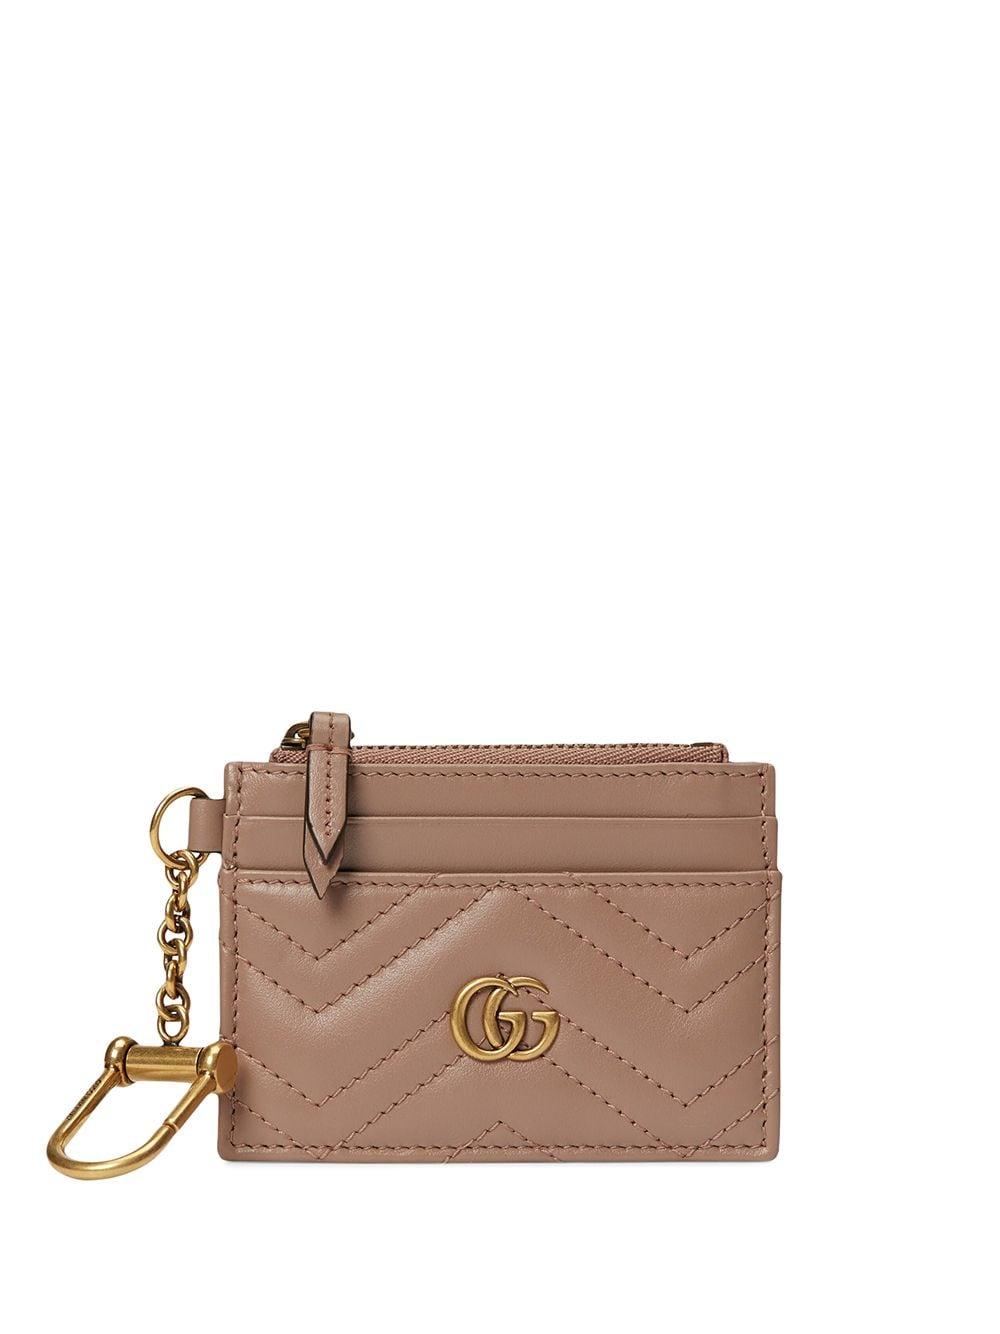 Gucci Keychain Wallet Wallets for Women